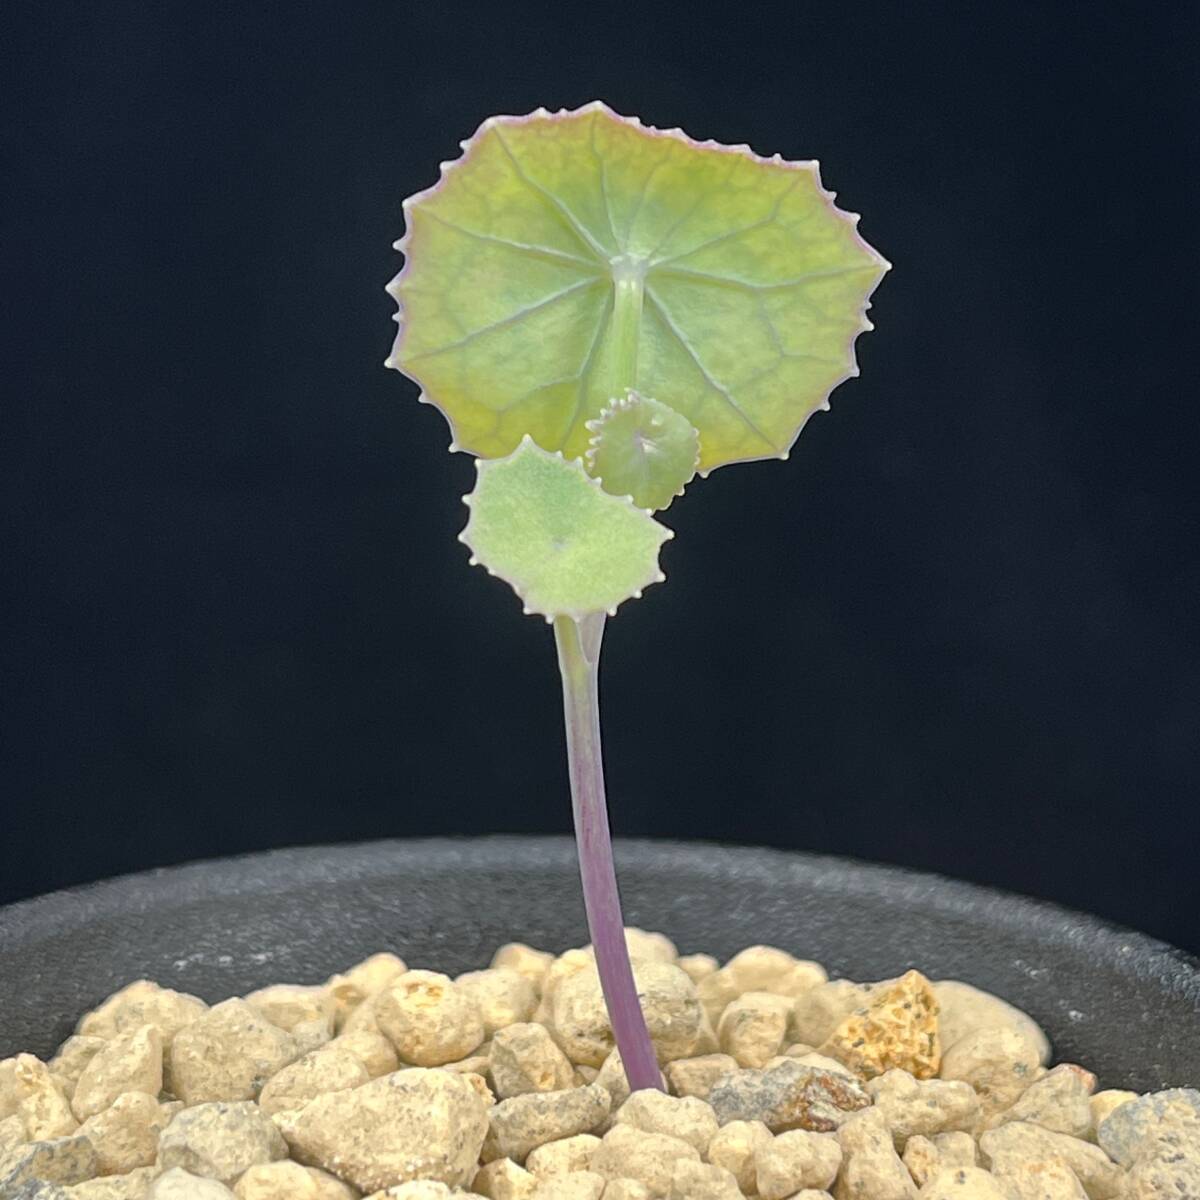 《PW》セネキオ(セネシオ)“オキシリフォリウス,Senecio oxyriifolius(small round leaf)”多肉植物の画像2